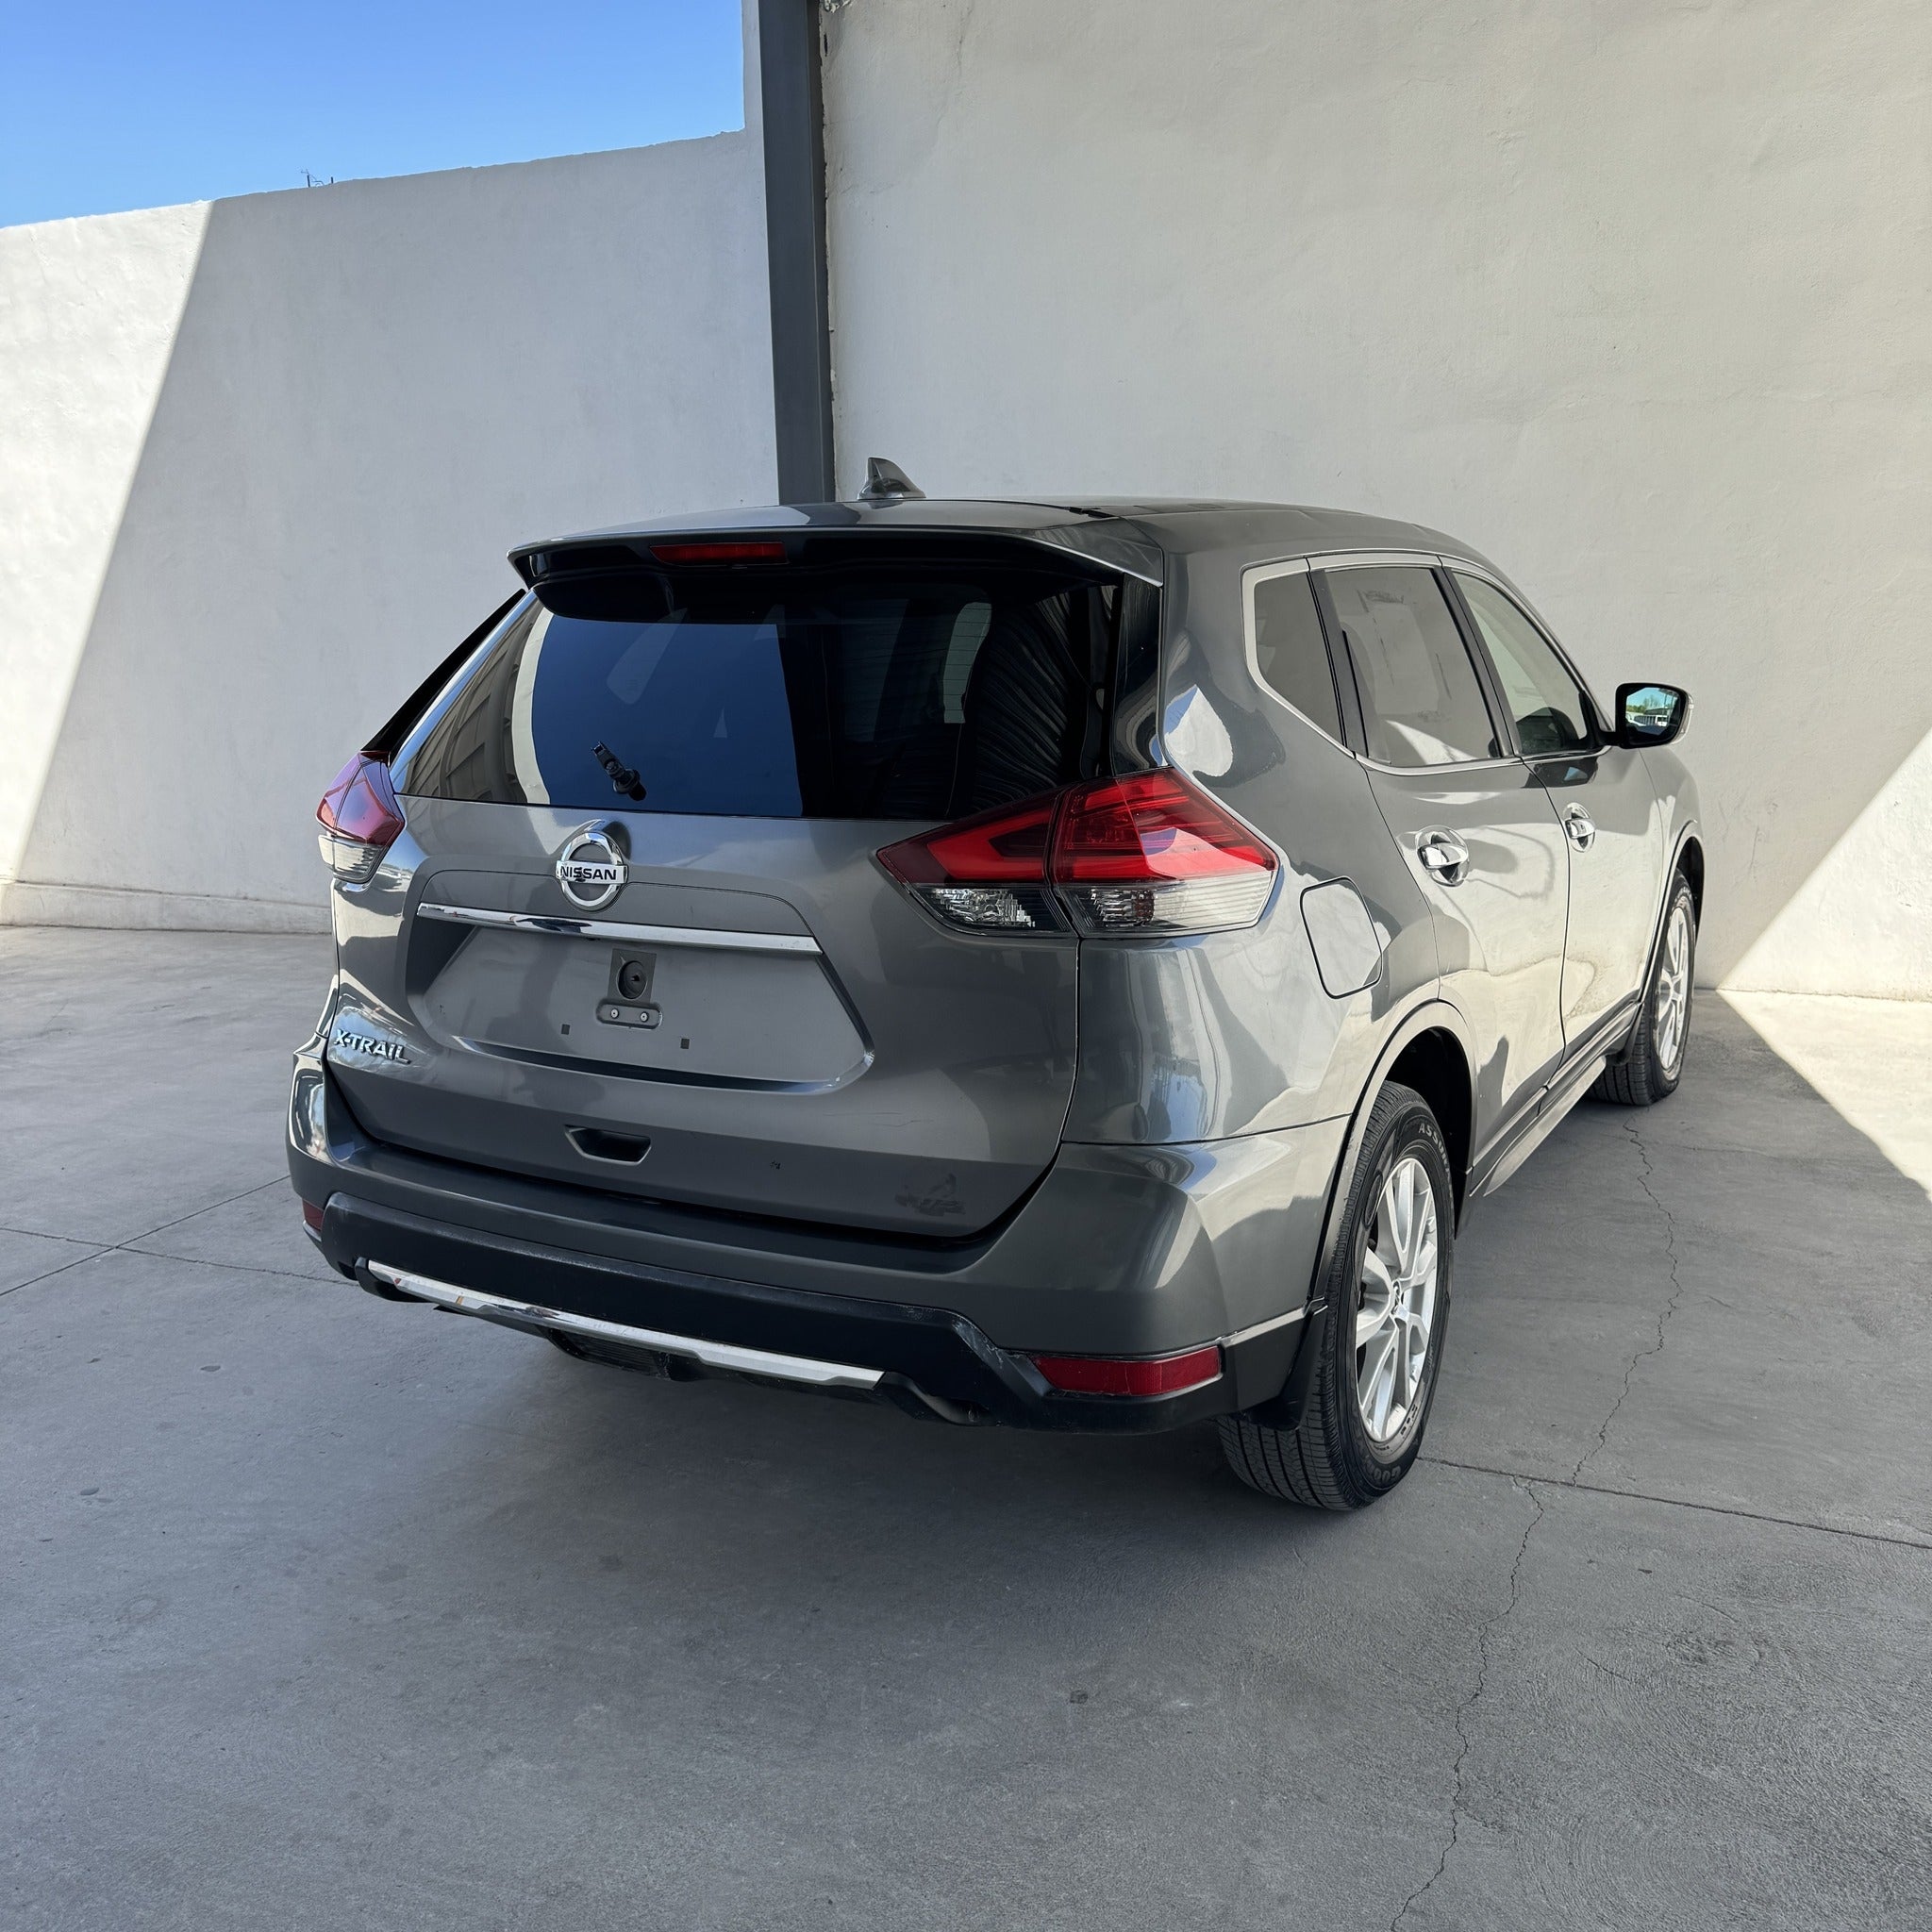 2019 Nissan X-Trail VUD 5 pts. Sense, CVT, CD, 5 pas., RA-17 (línea anterior)